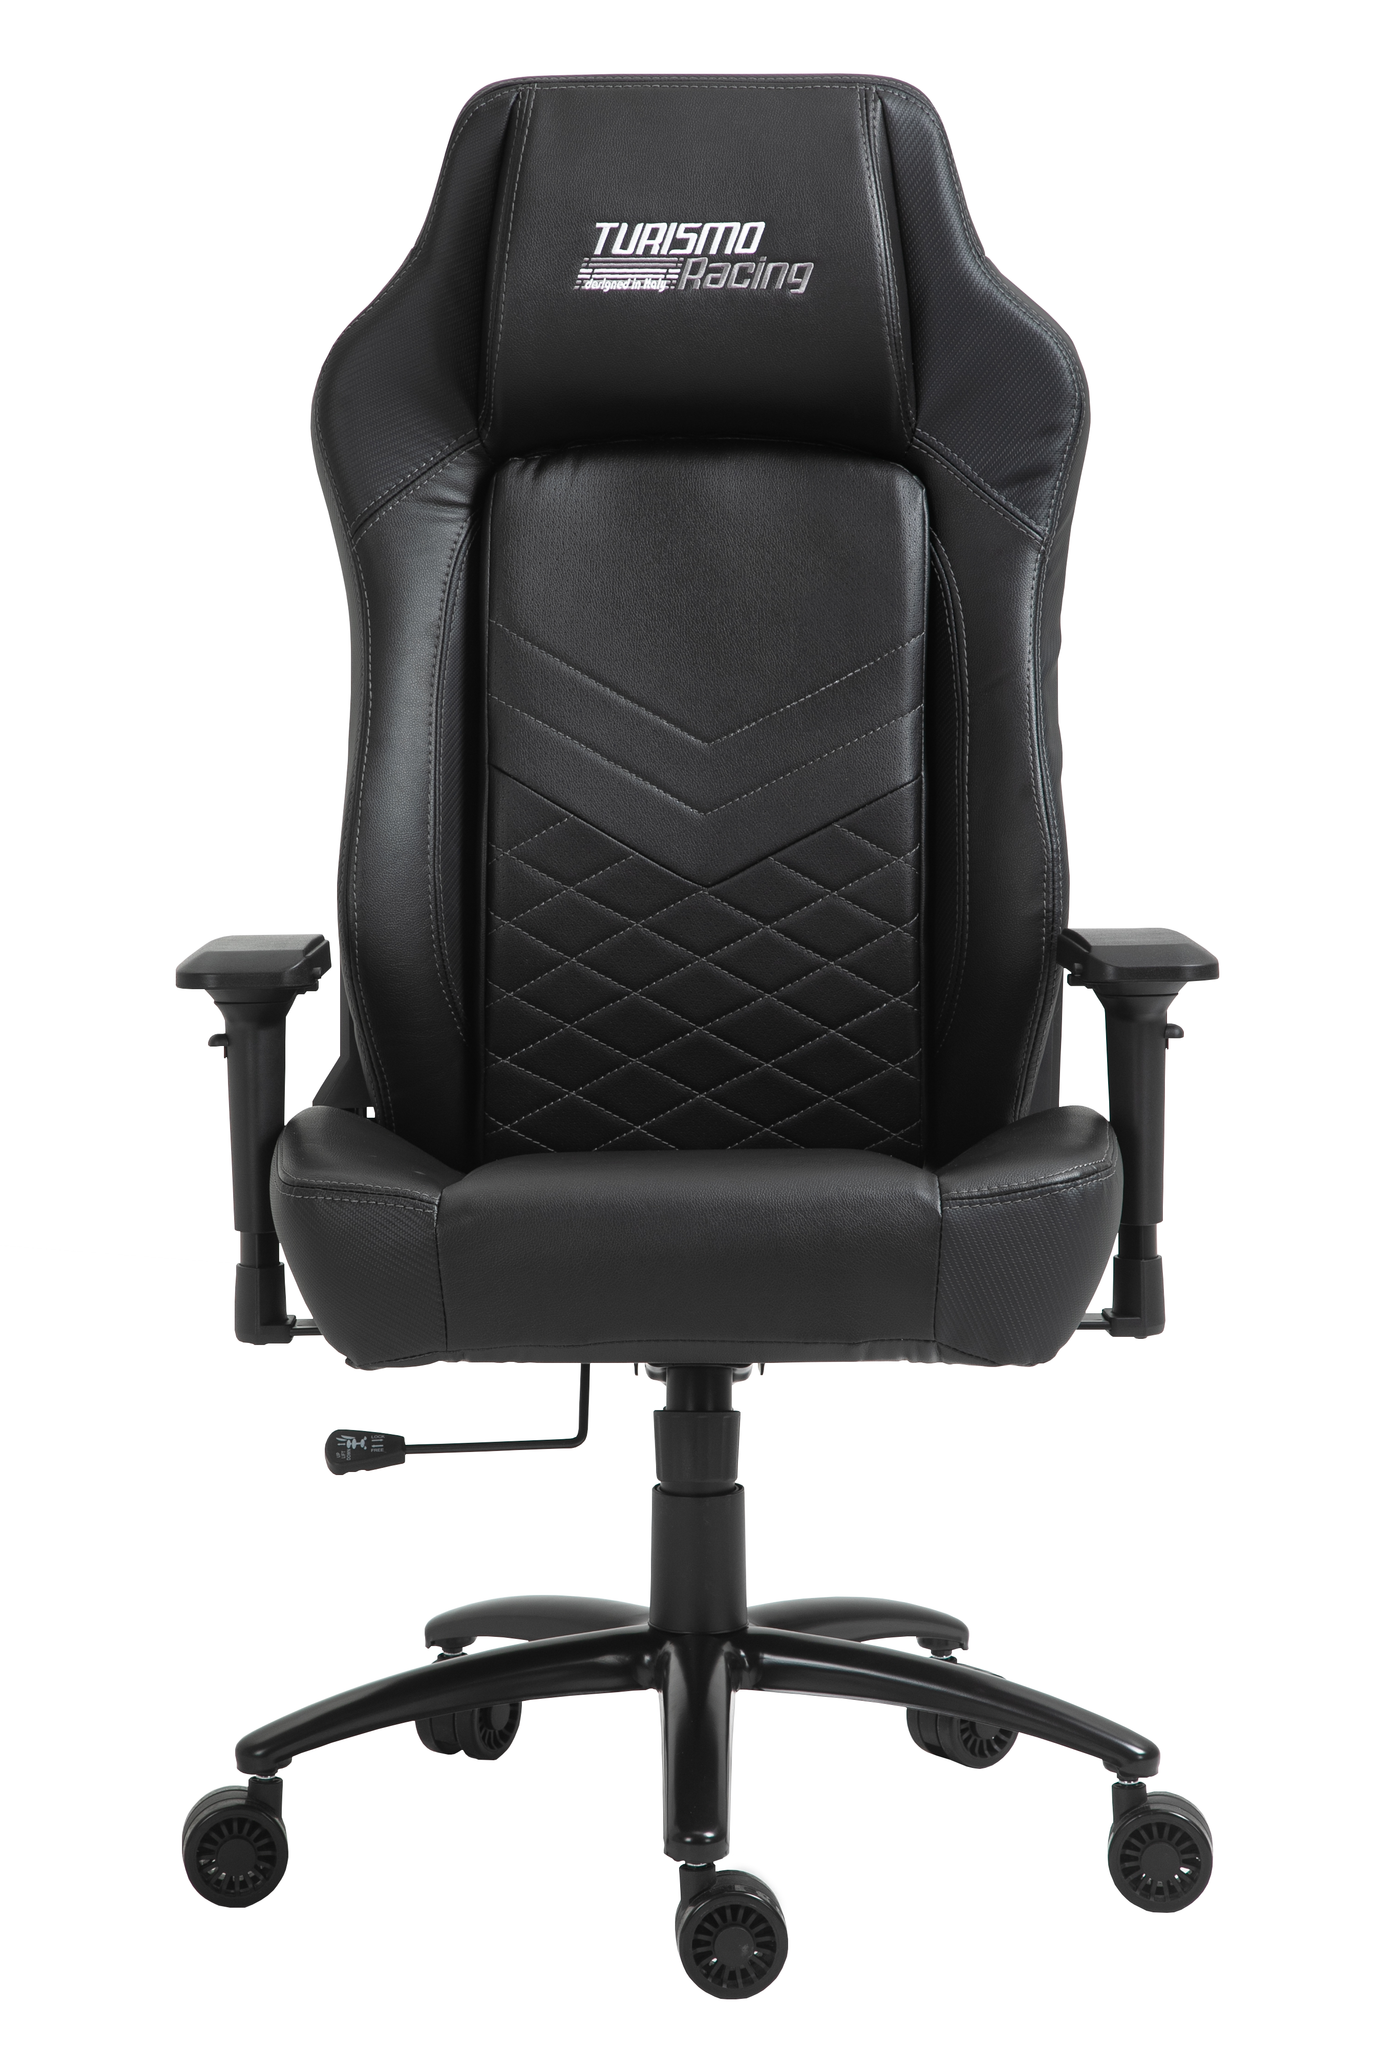 Evoluzione XL Black / Grey Gaming Chair – Turismo Racing